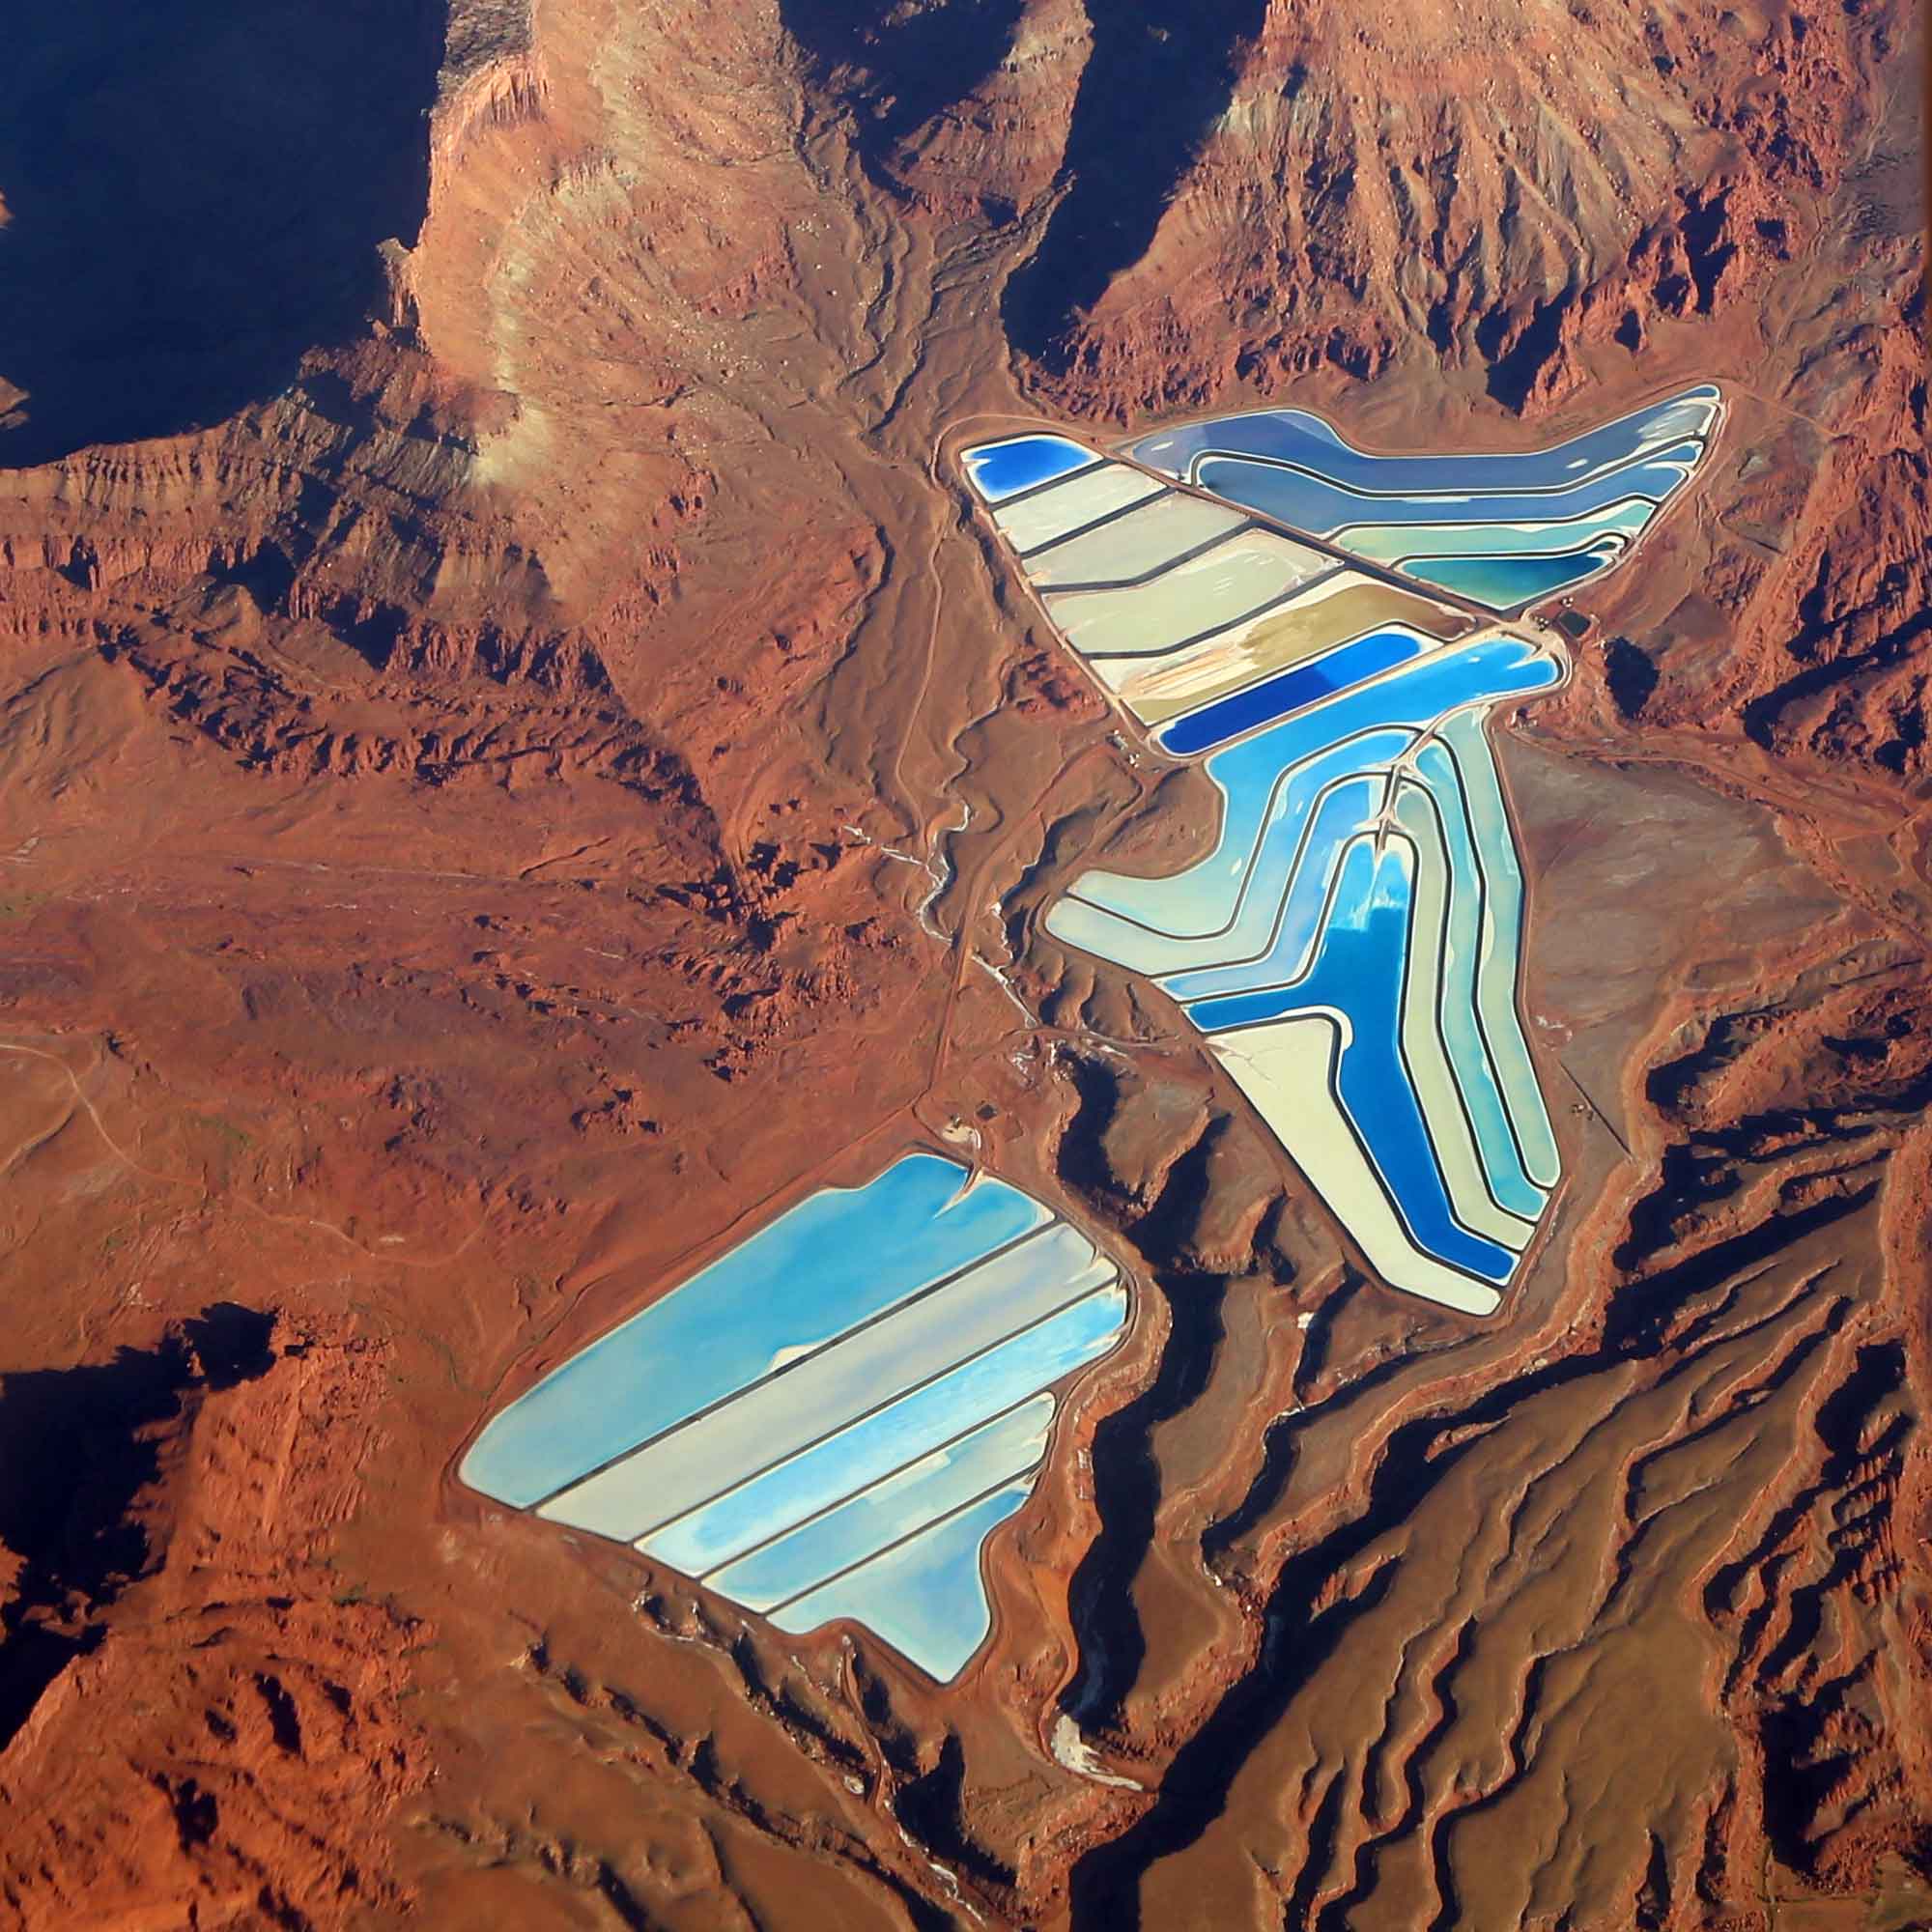 Aerial photograph of the Intrepid Potash Mine near Moab, Utah.